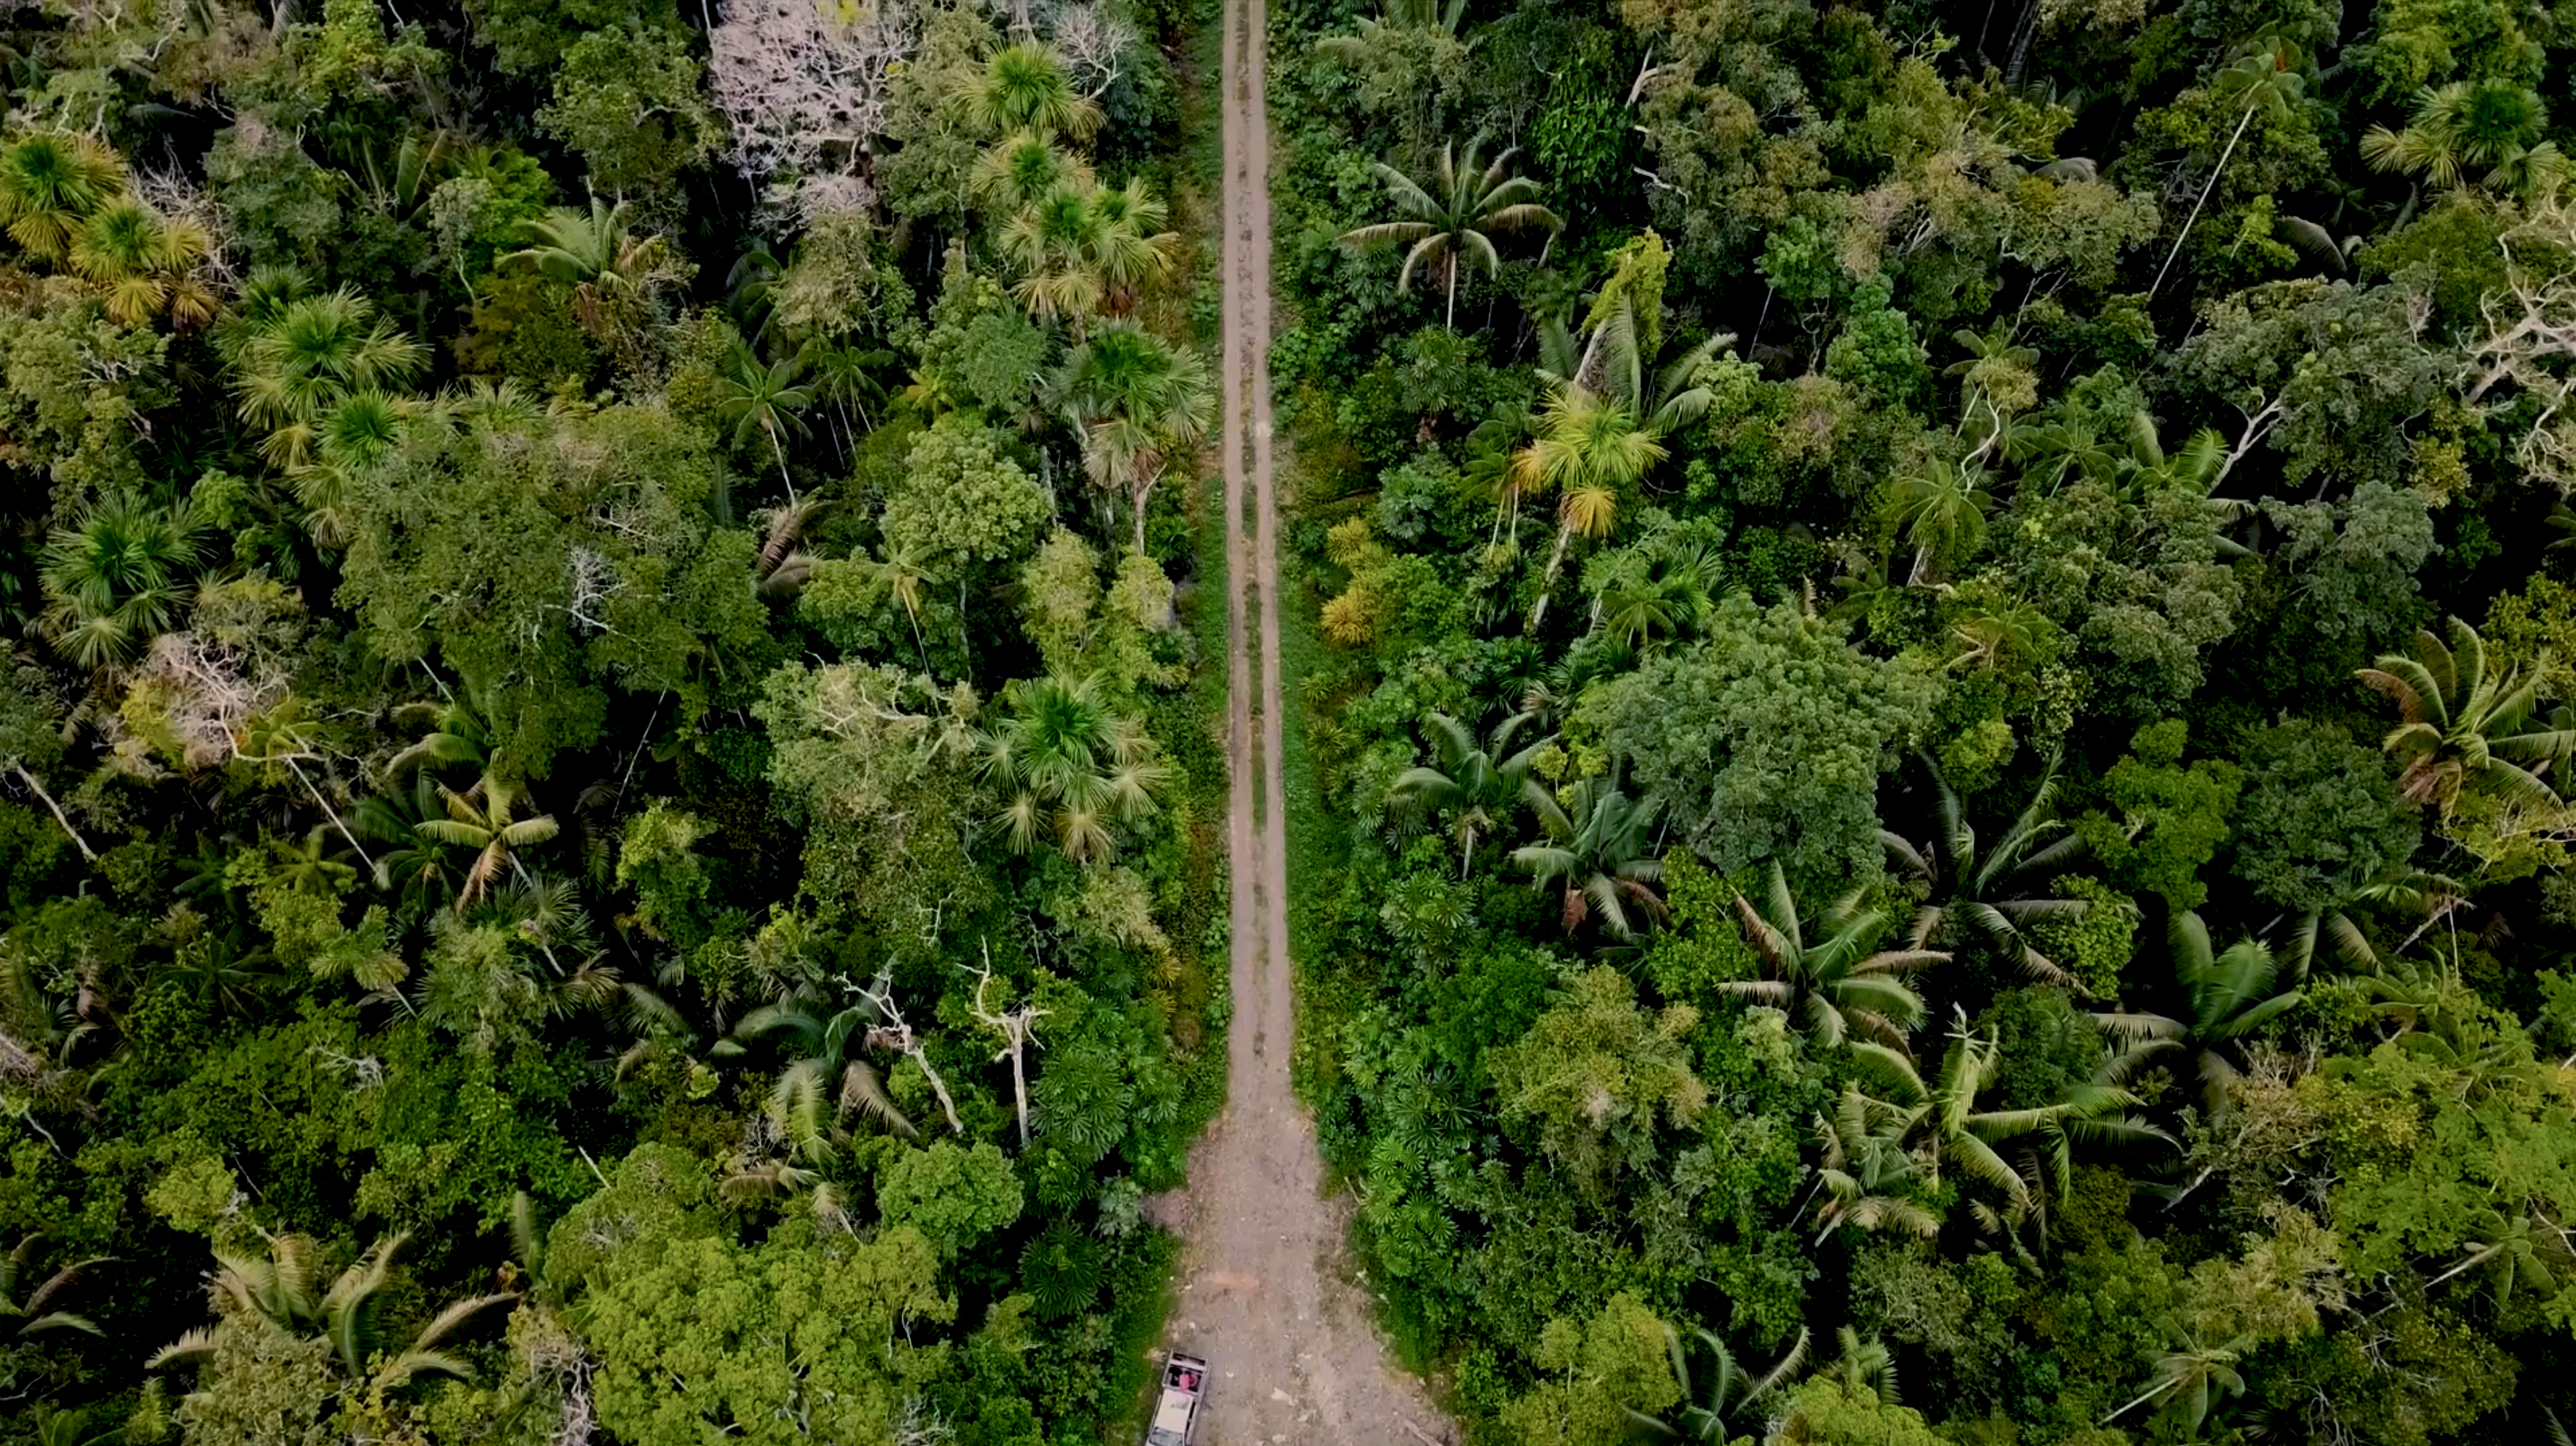 The road cutting through the Manu Biosphere Reserve.